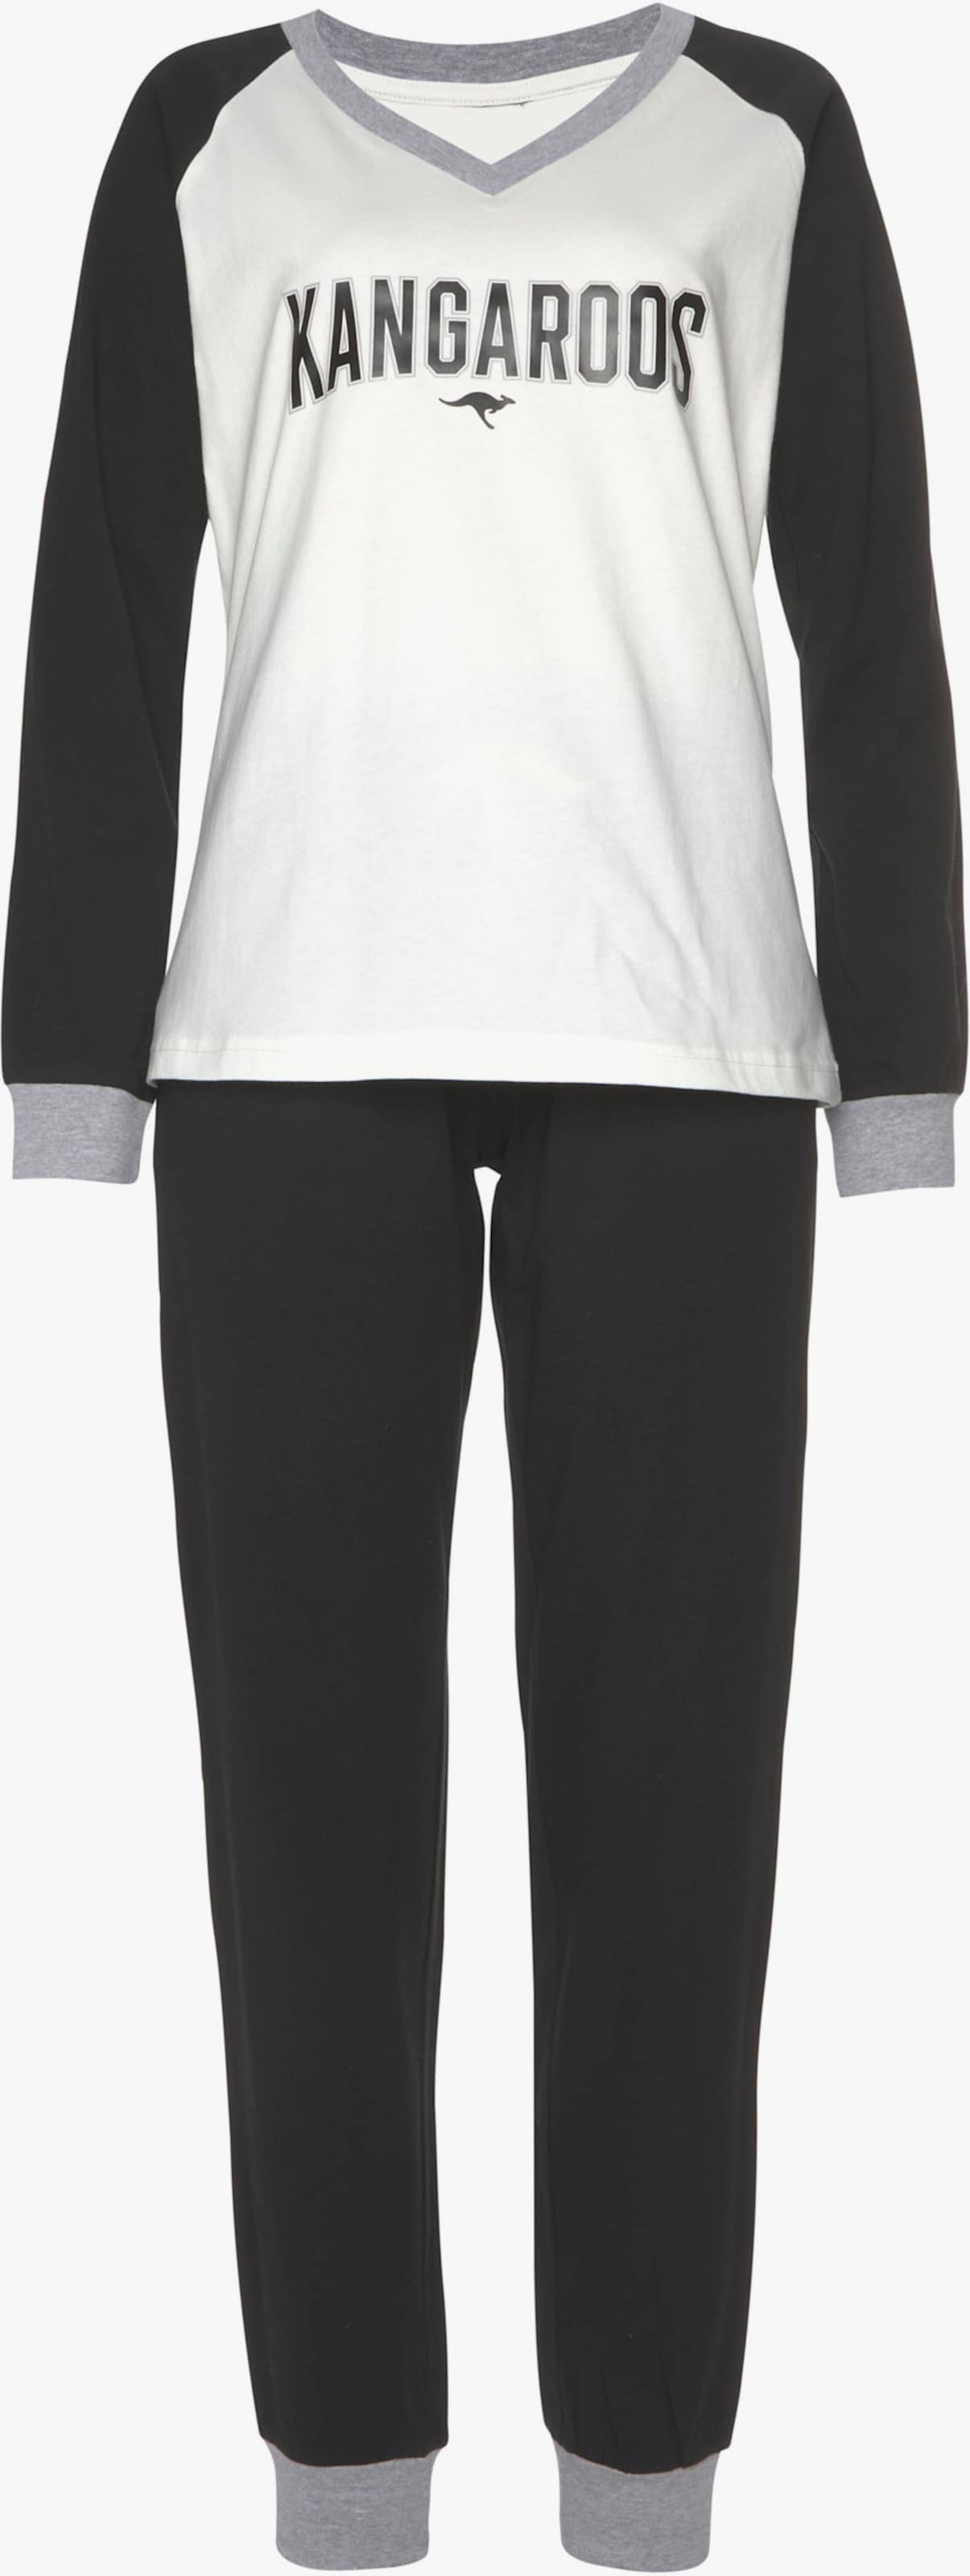 KangaROOS Pyjama - zwart/wit